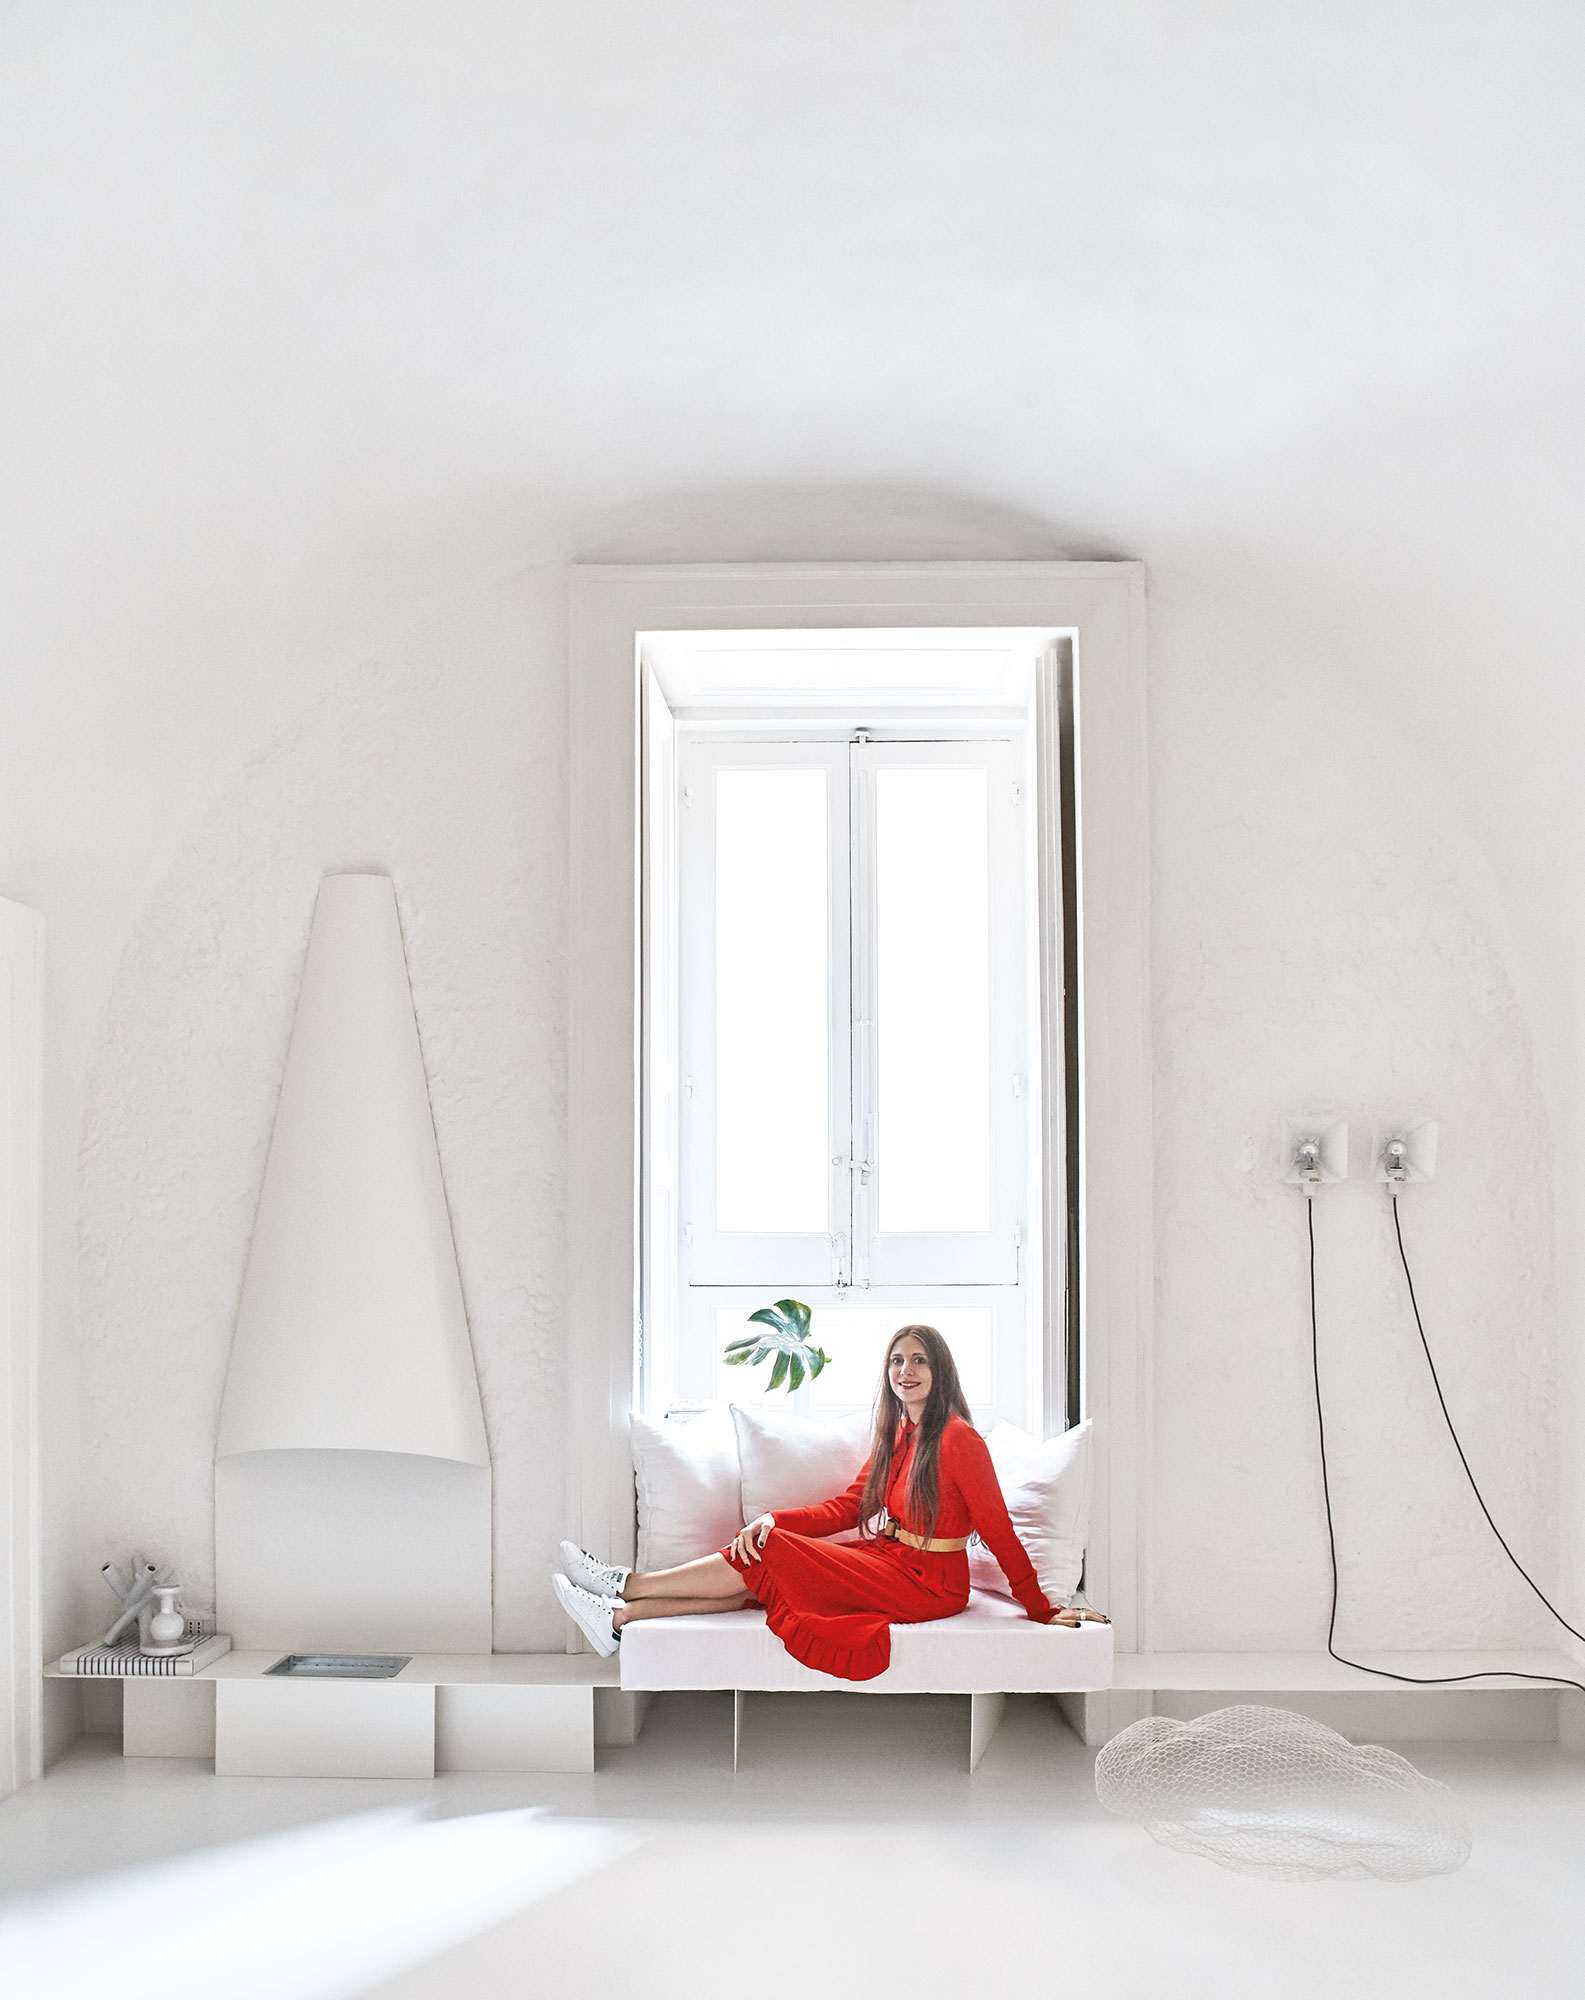 Elle Decor July 2018 “Bianco assoluto” | Andrea Ferrari | Elle Decor | Numerique Retouch Photo Retouching Studio